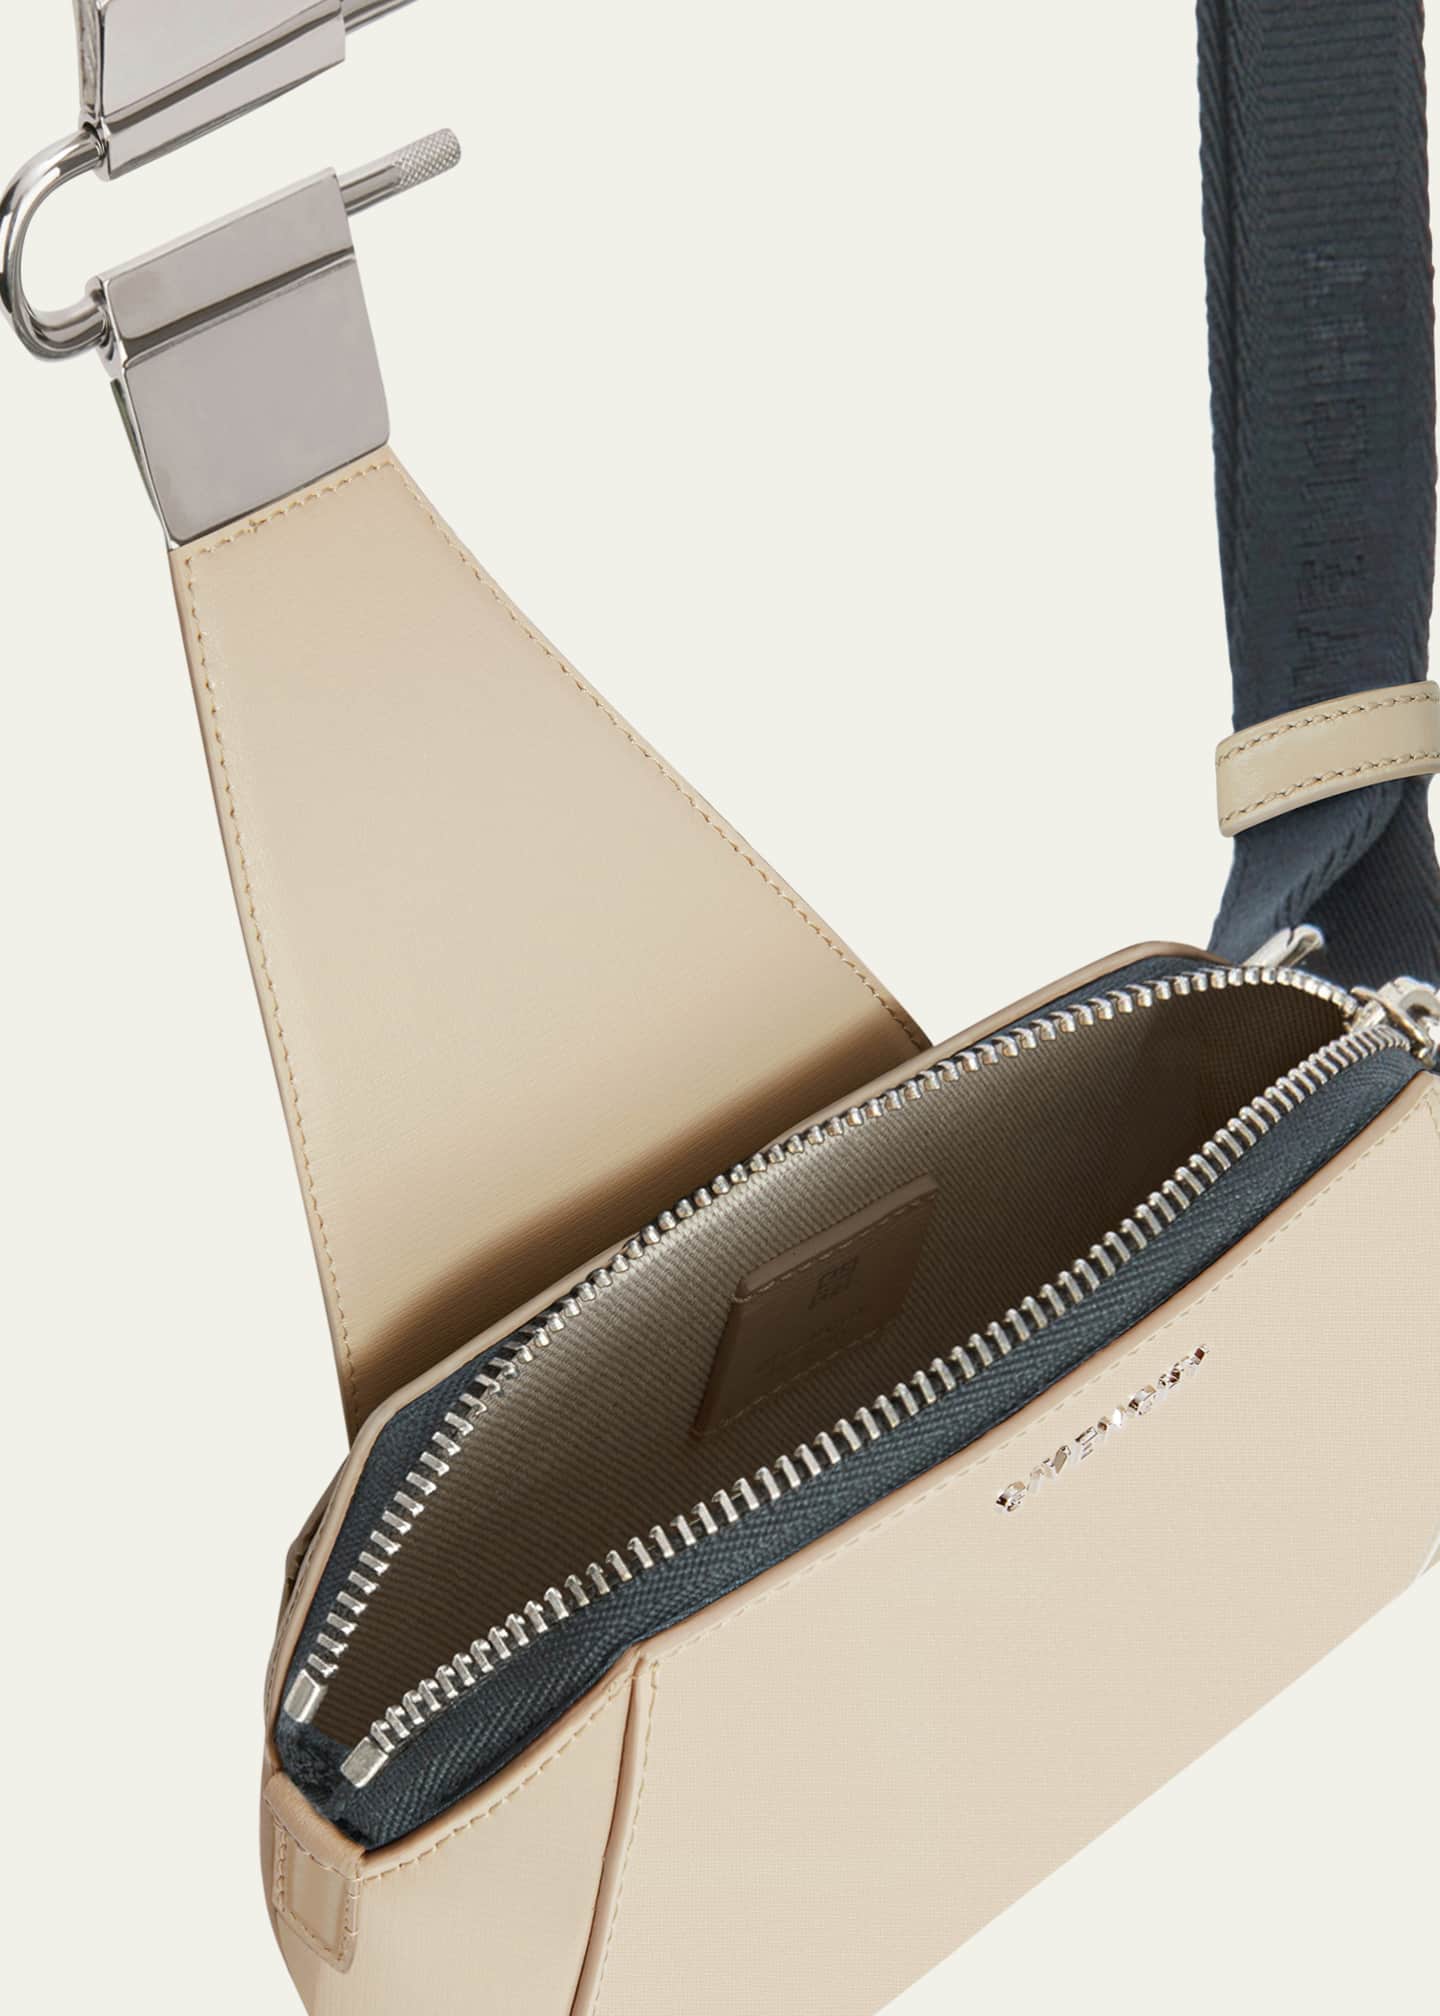 Givenchy Antigona Leather Crossbody Bag